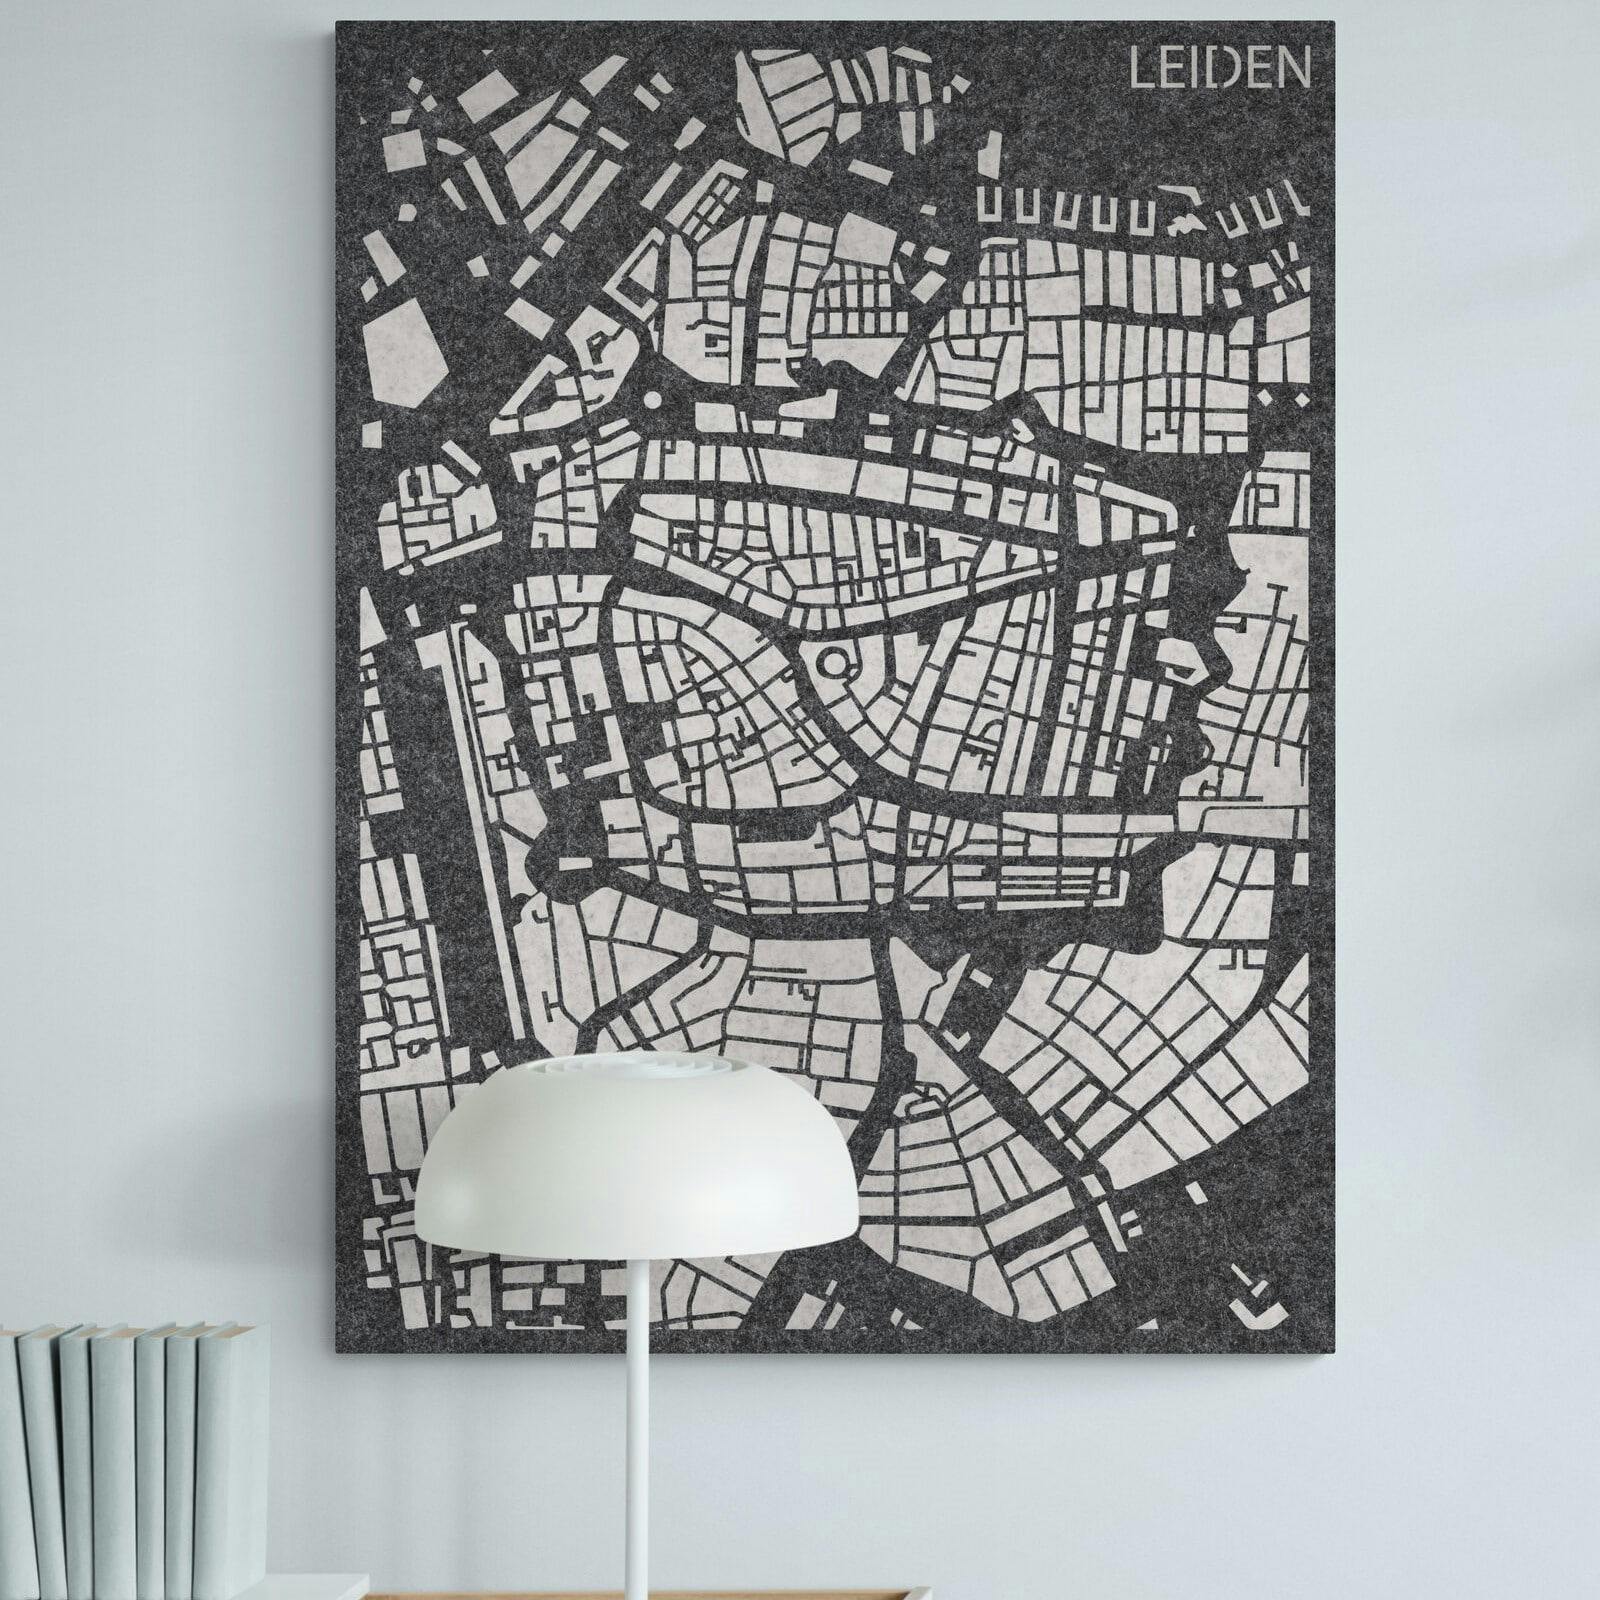 city-map-leiden-1